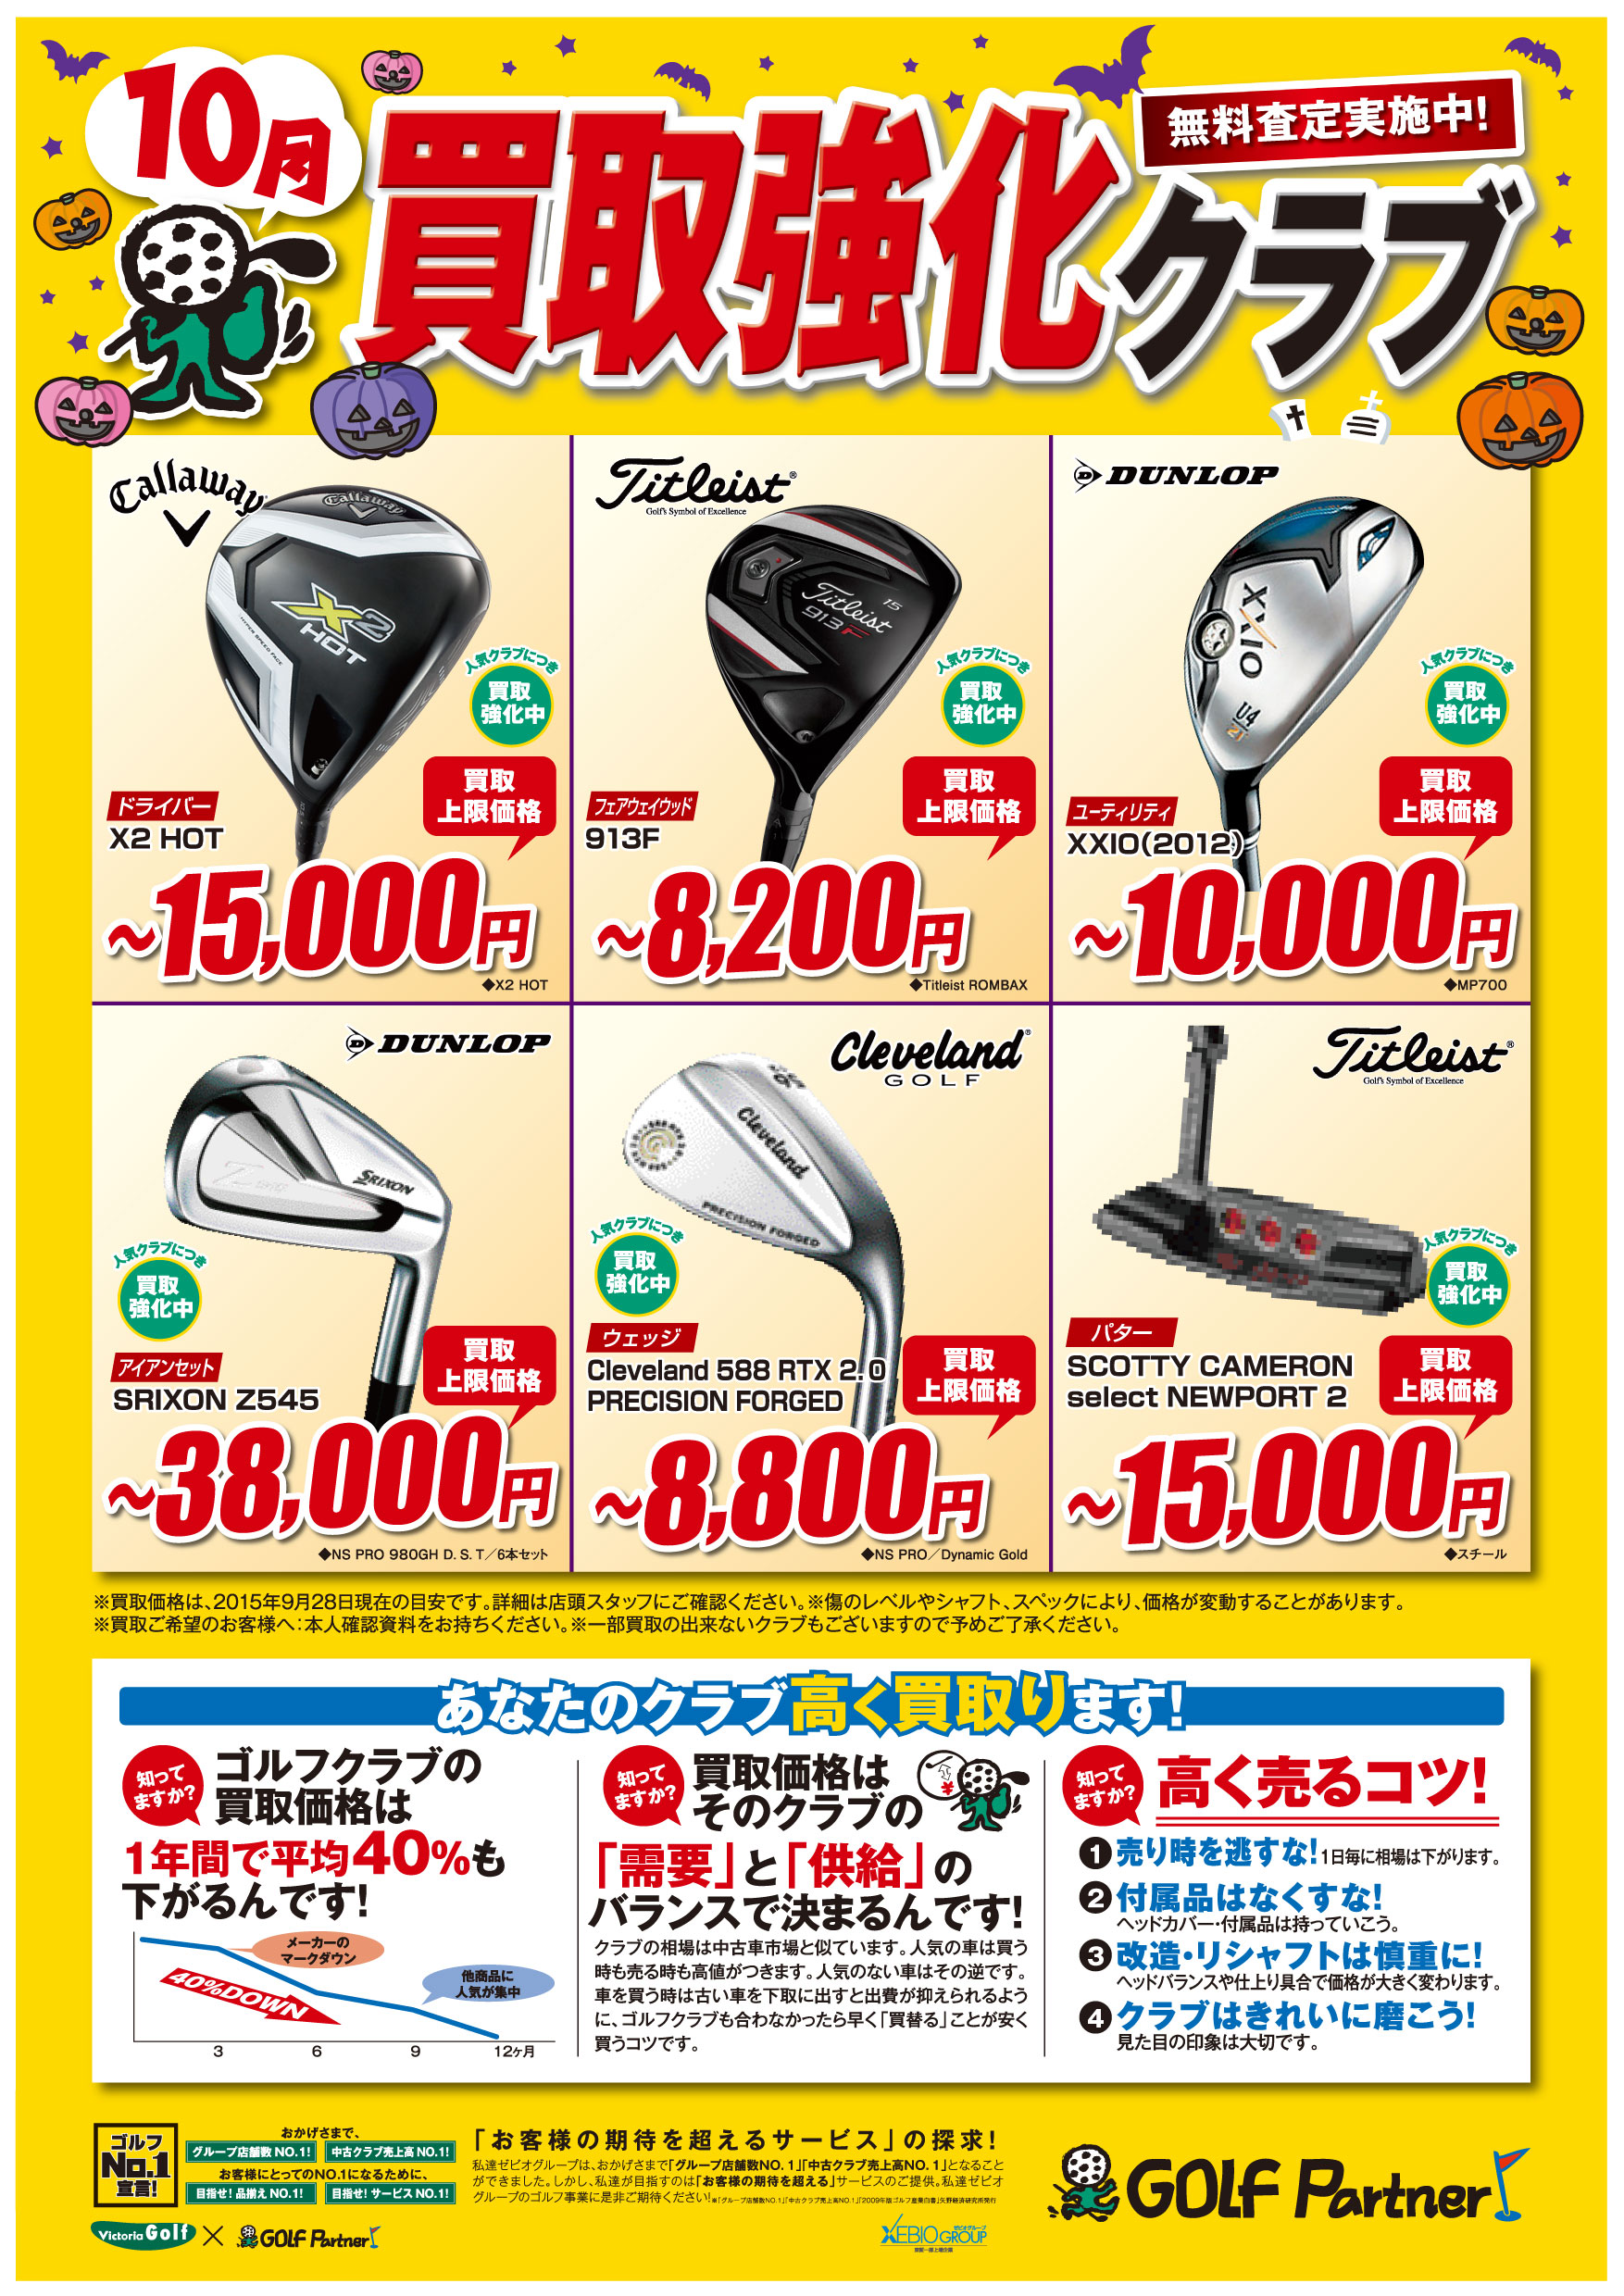 http://www.golfpartner.co.jp/536/1509_10kaitori_A3_GP.jpg